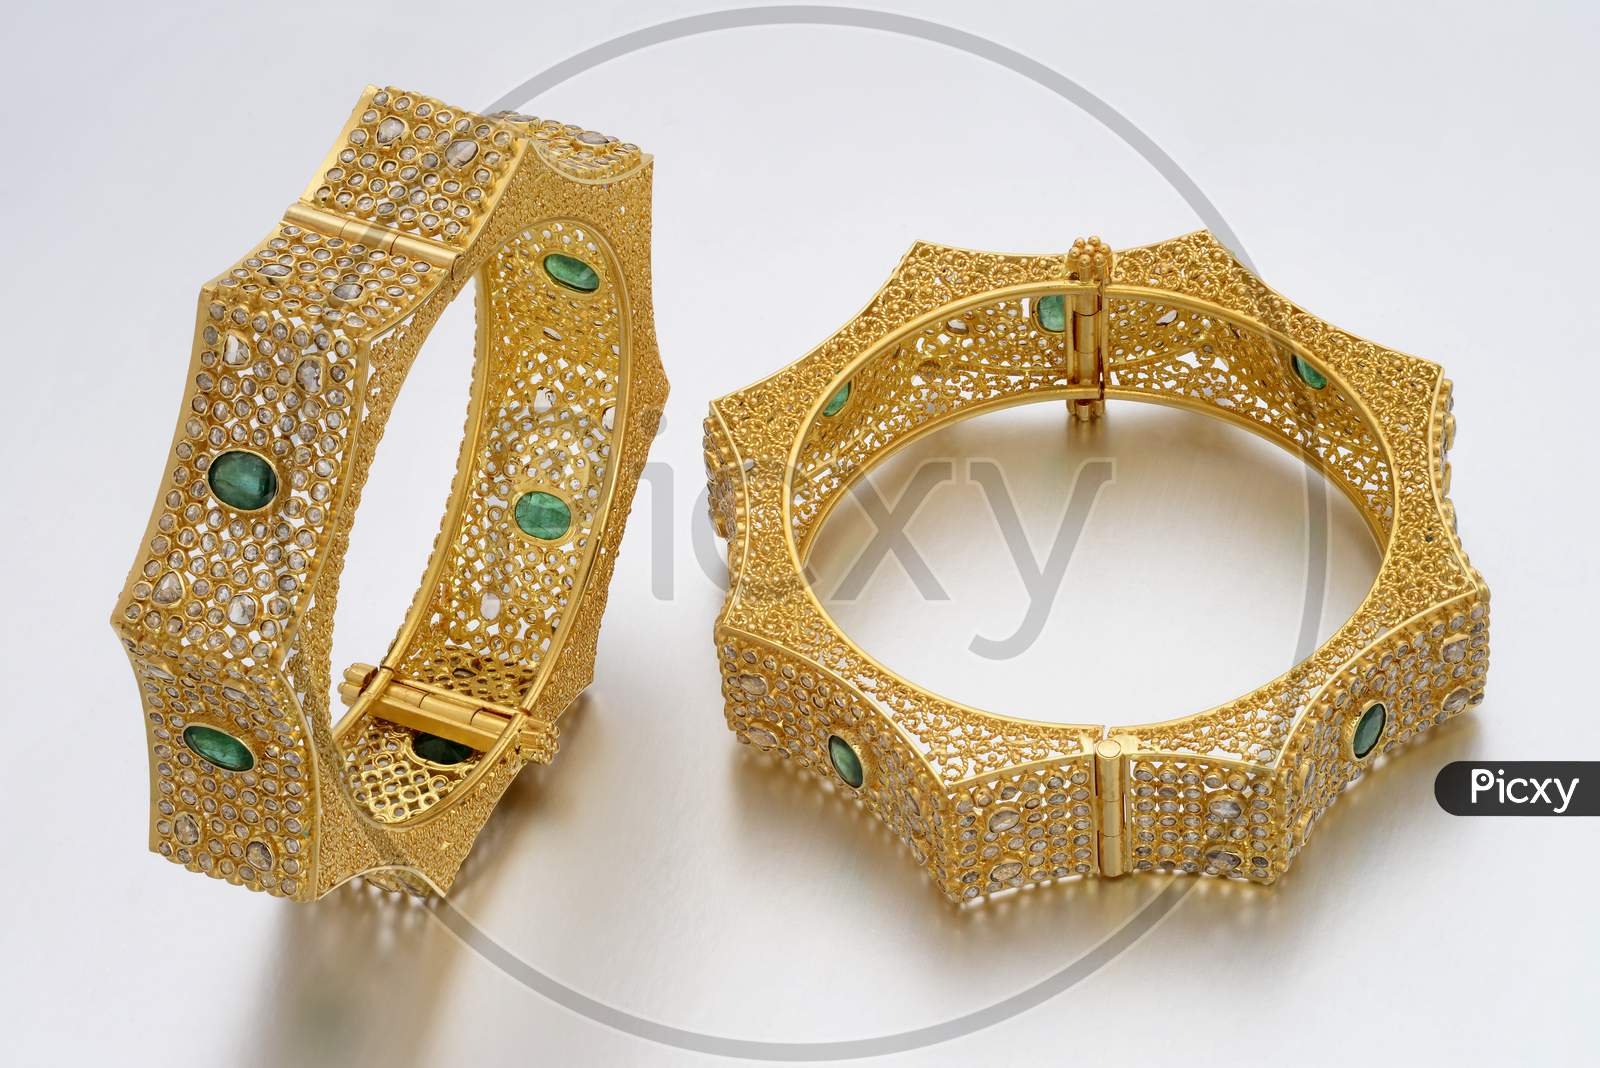 Indian Wedding Fancy Jeweley of Bangles with gemstones